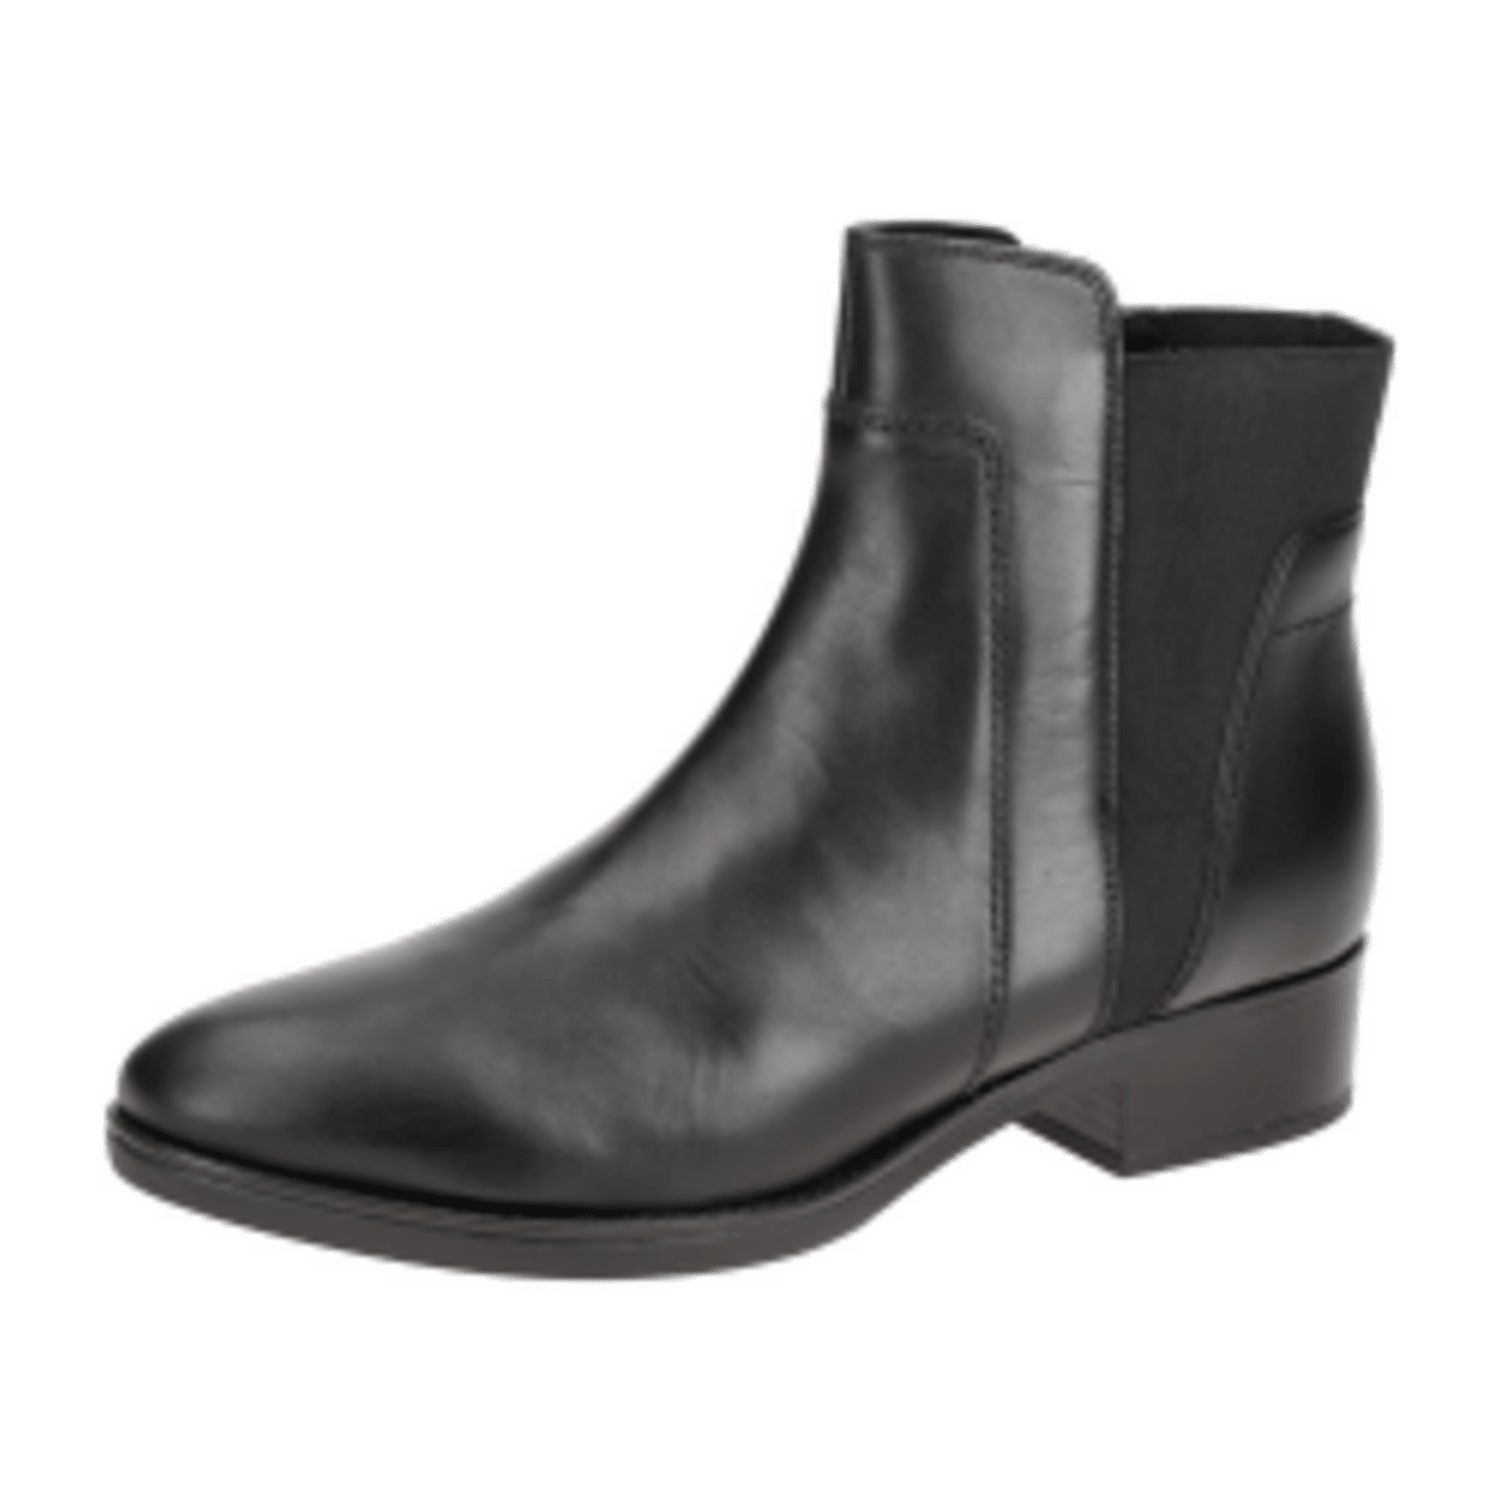 Geox Felicity Stiefelette Ankle Boots schwarz D84G1F